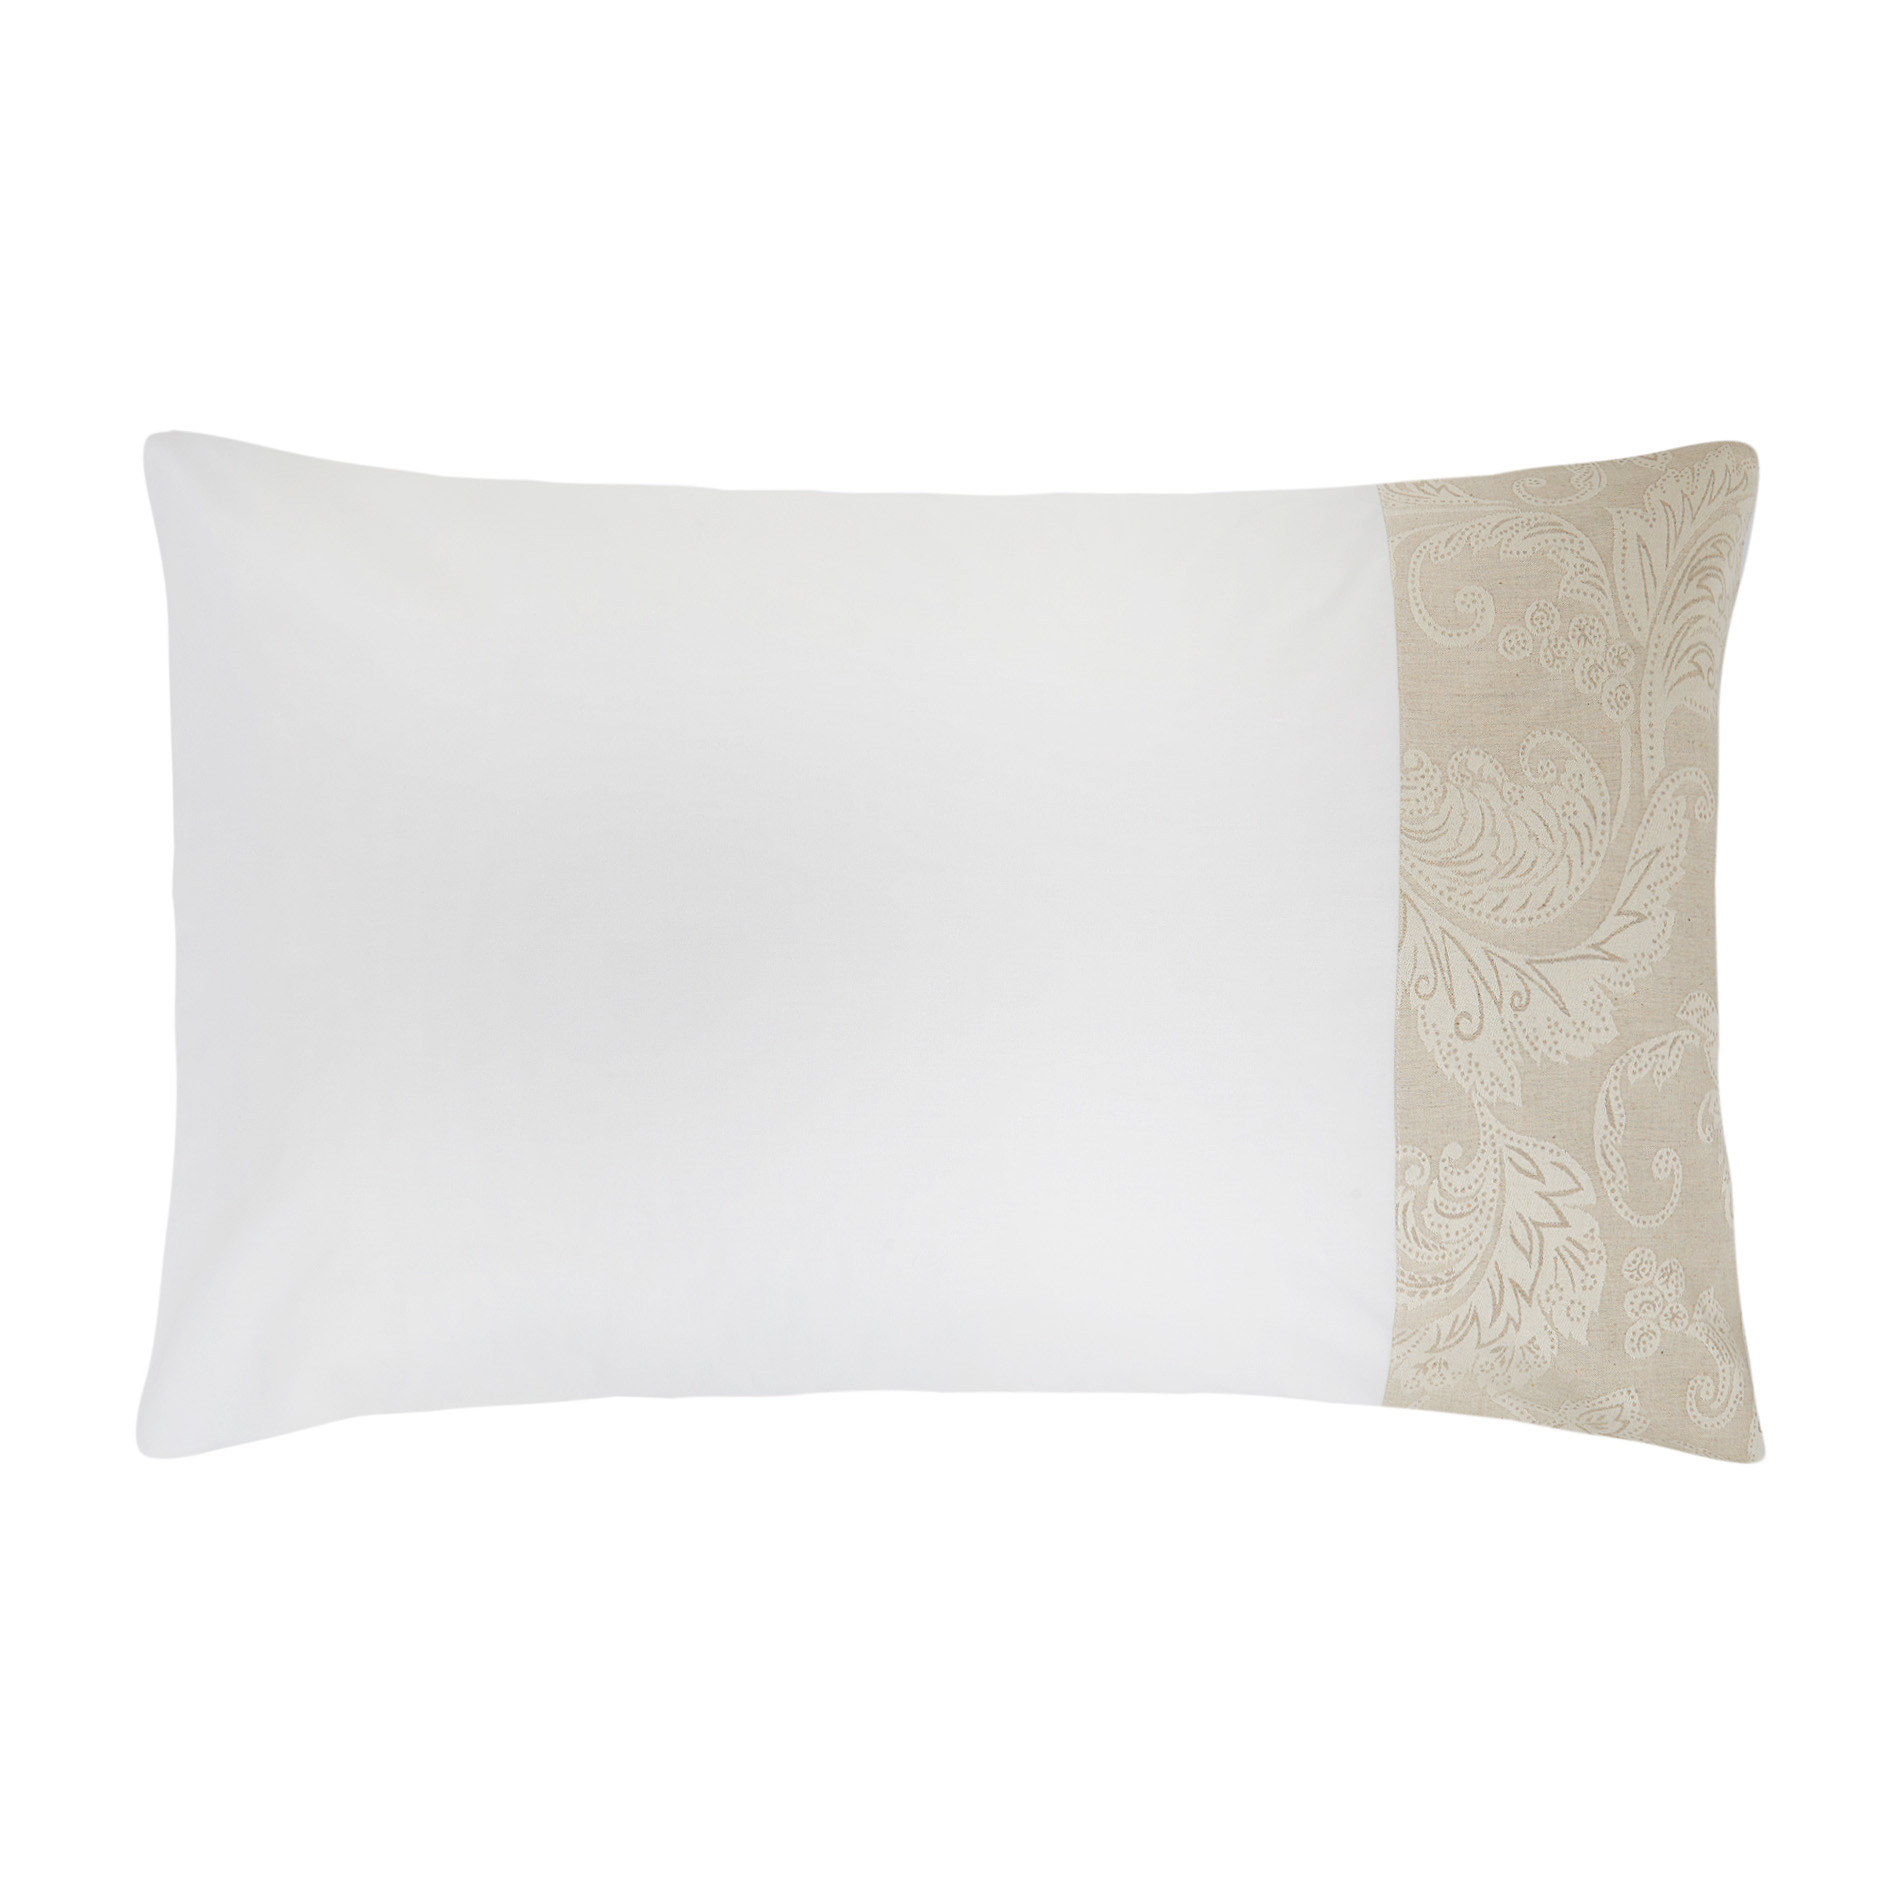 Portofino pillowcase in 100% cotton with linen trim, White, large image number 0